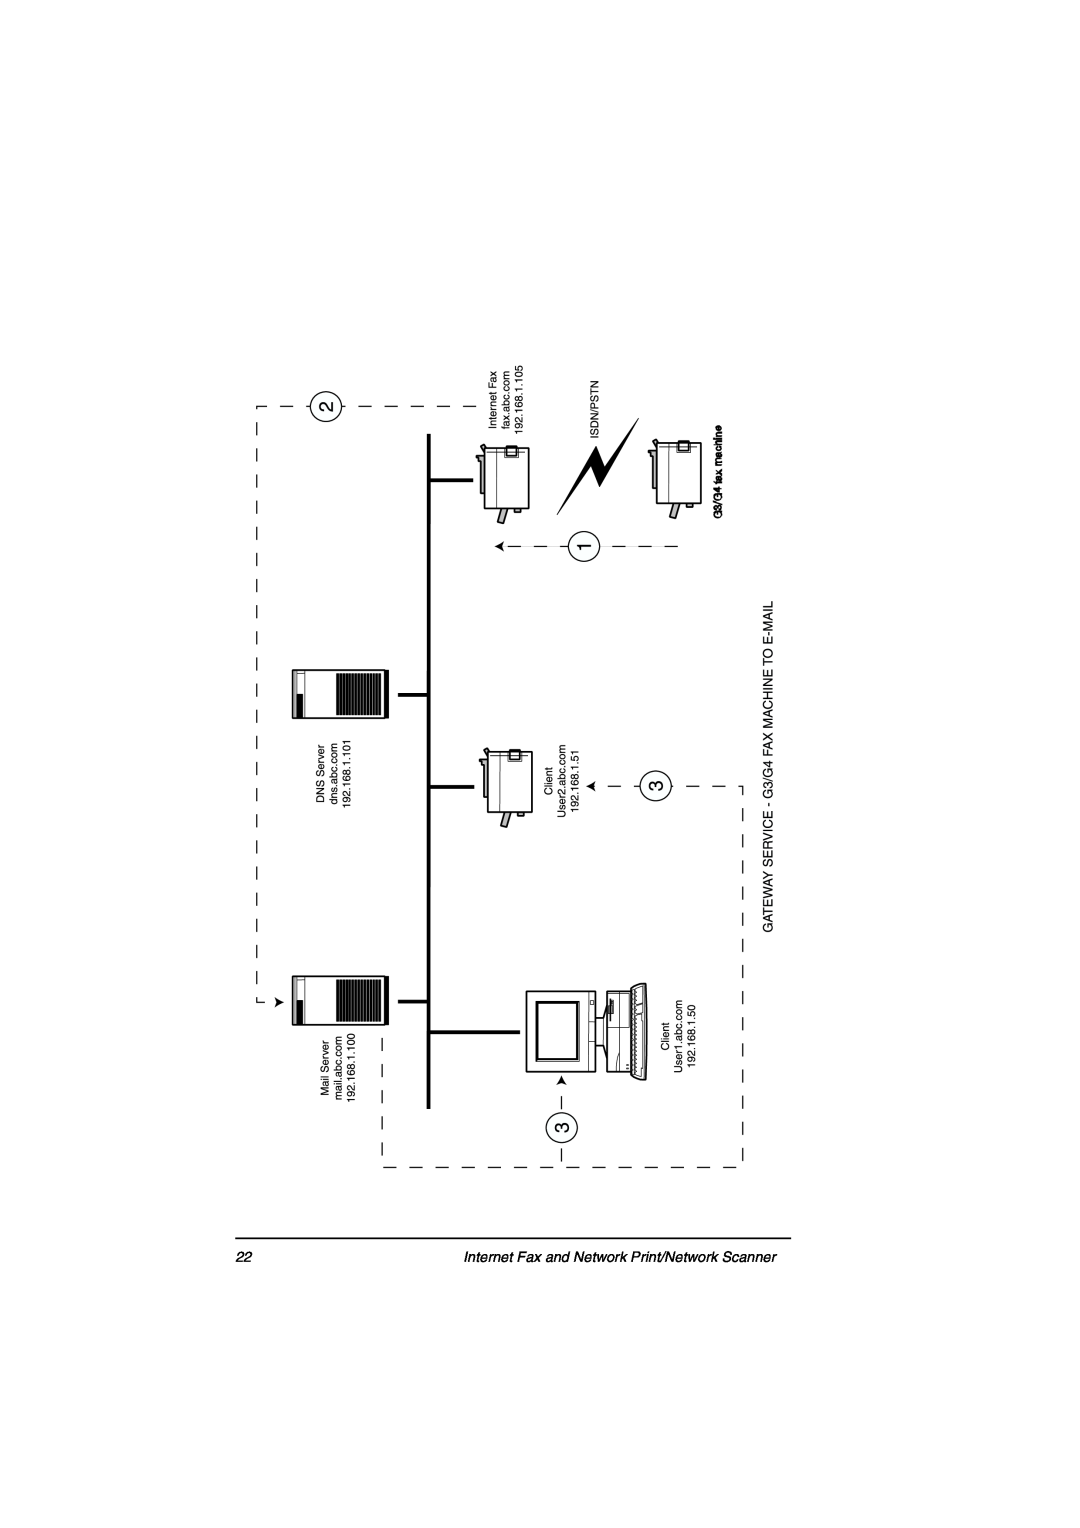 Oki ii manual Internet Fax and Network Print/Network Scanner 